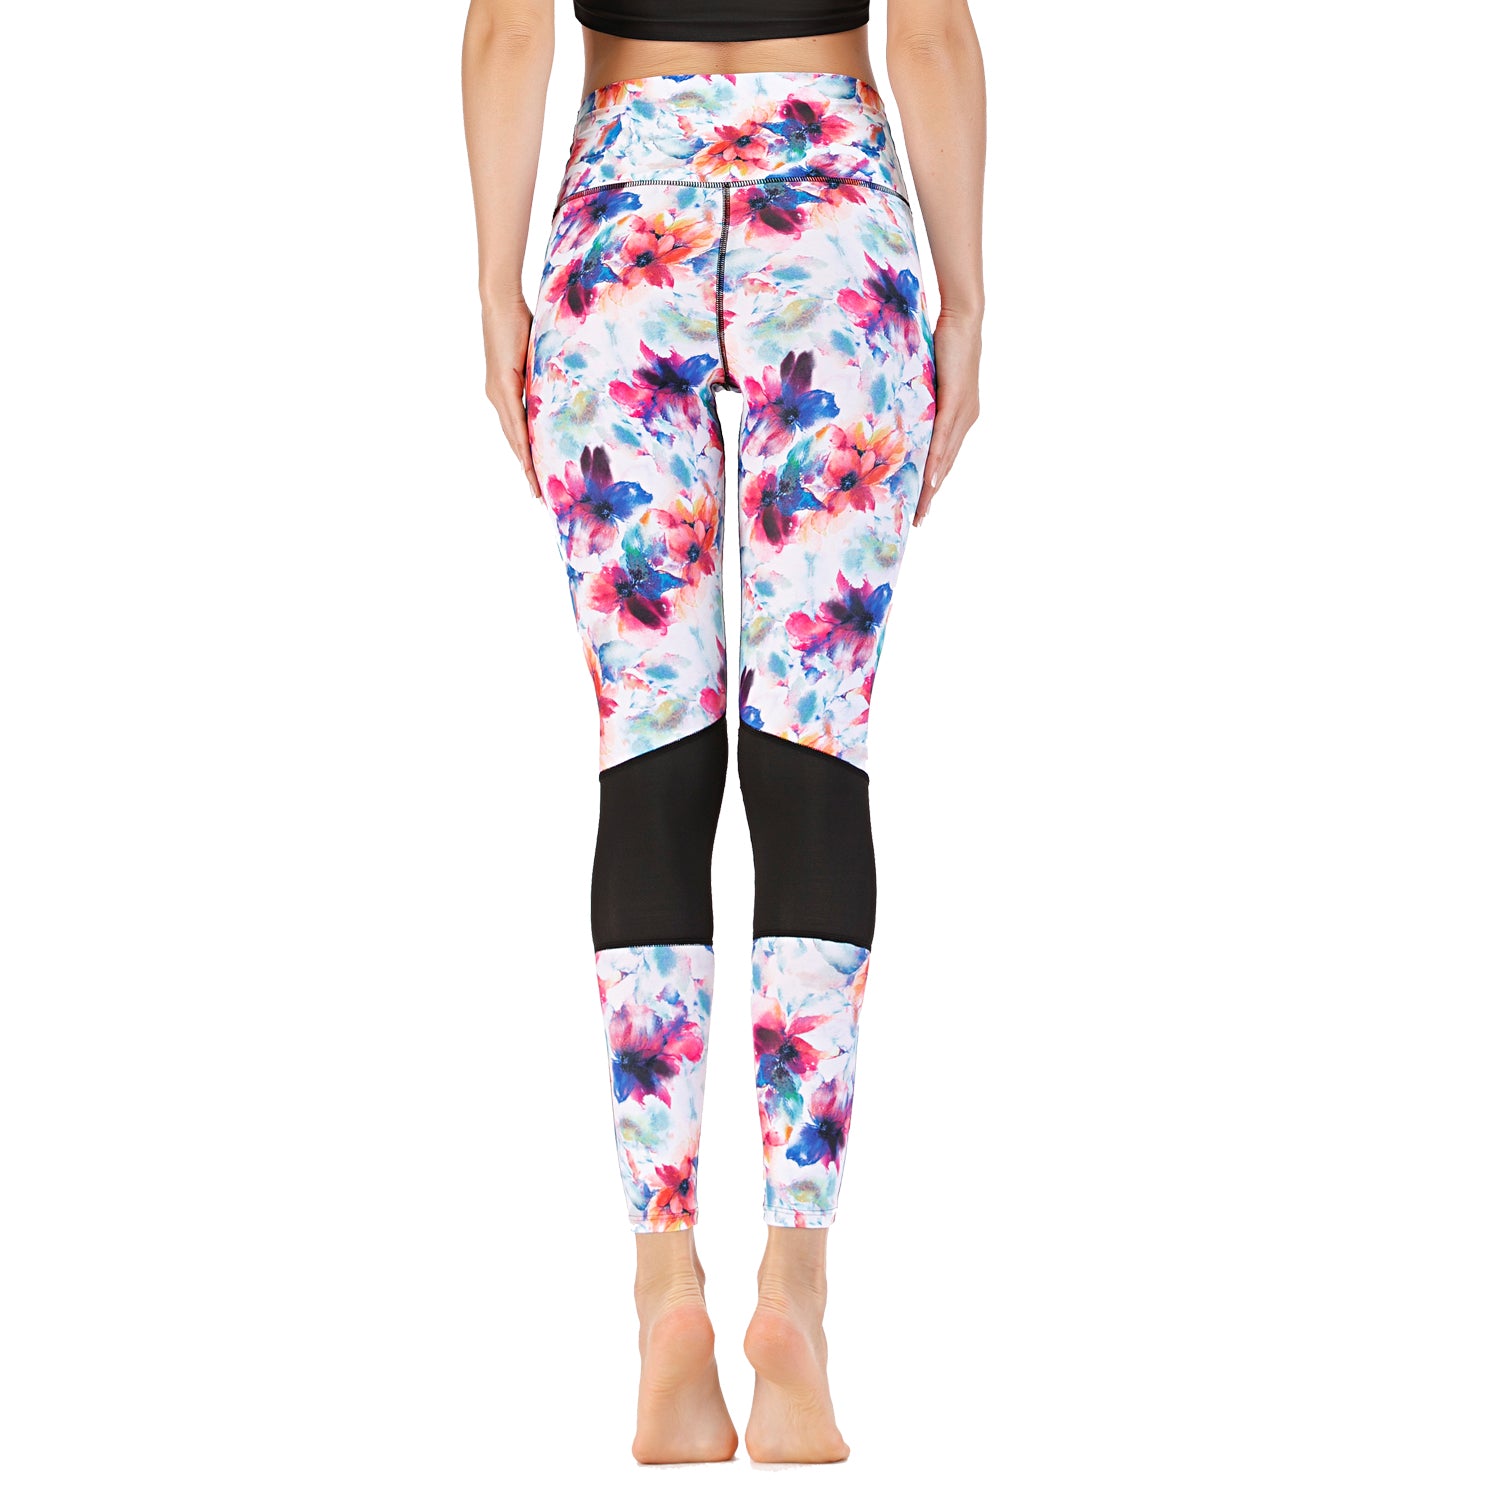 Gym Leggings for Women Workout Cloth Printed Yoga Pants